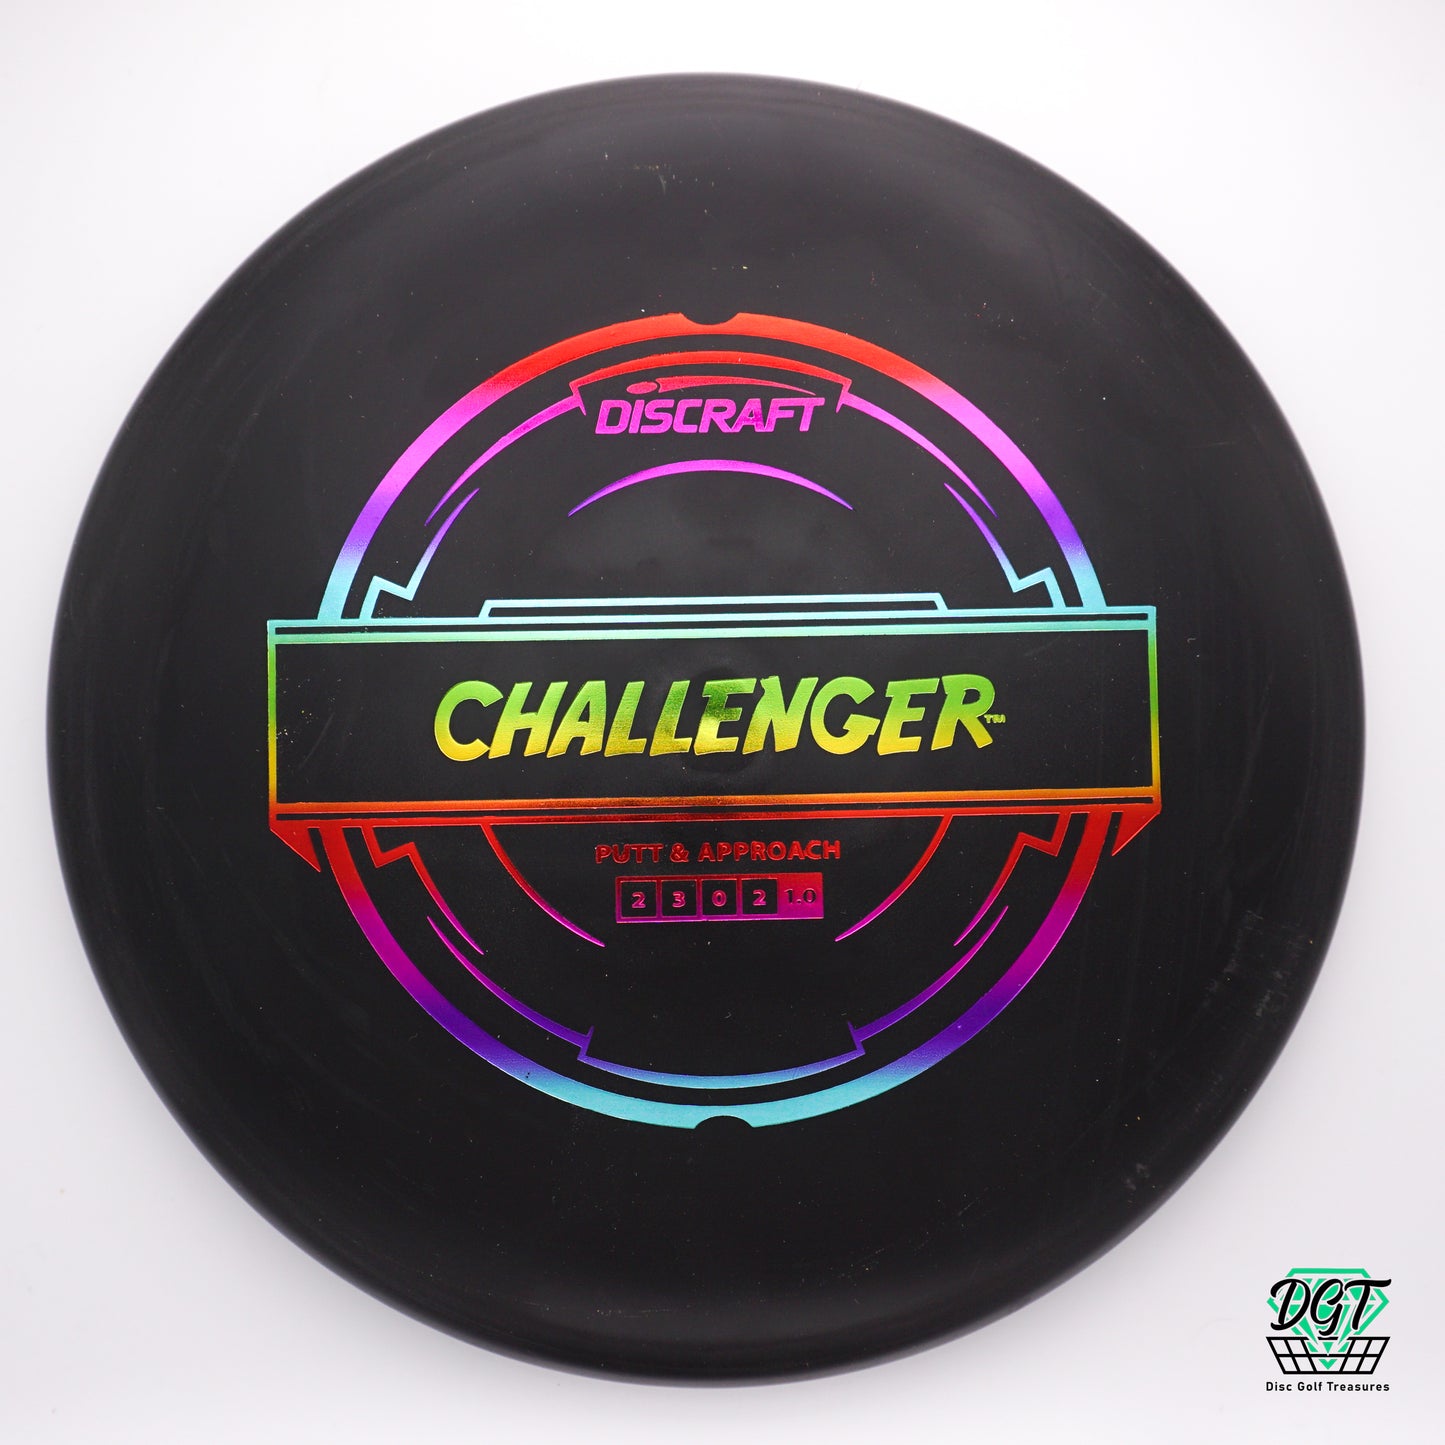 Putter Line Challenger